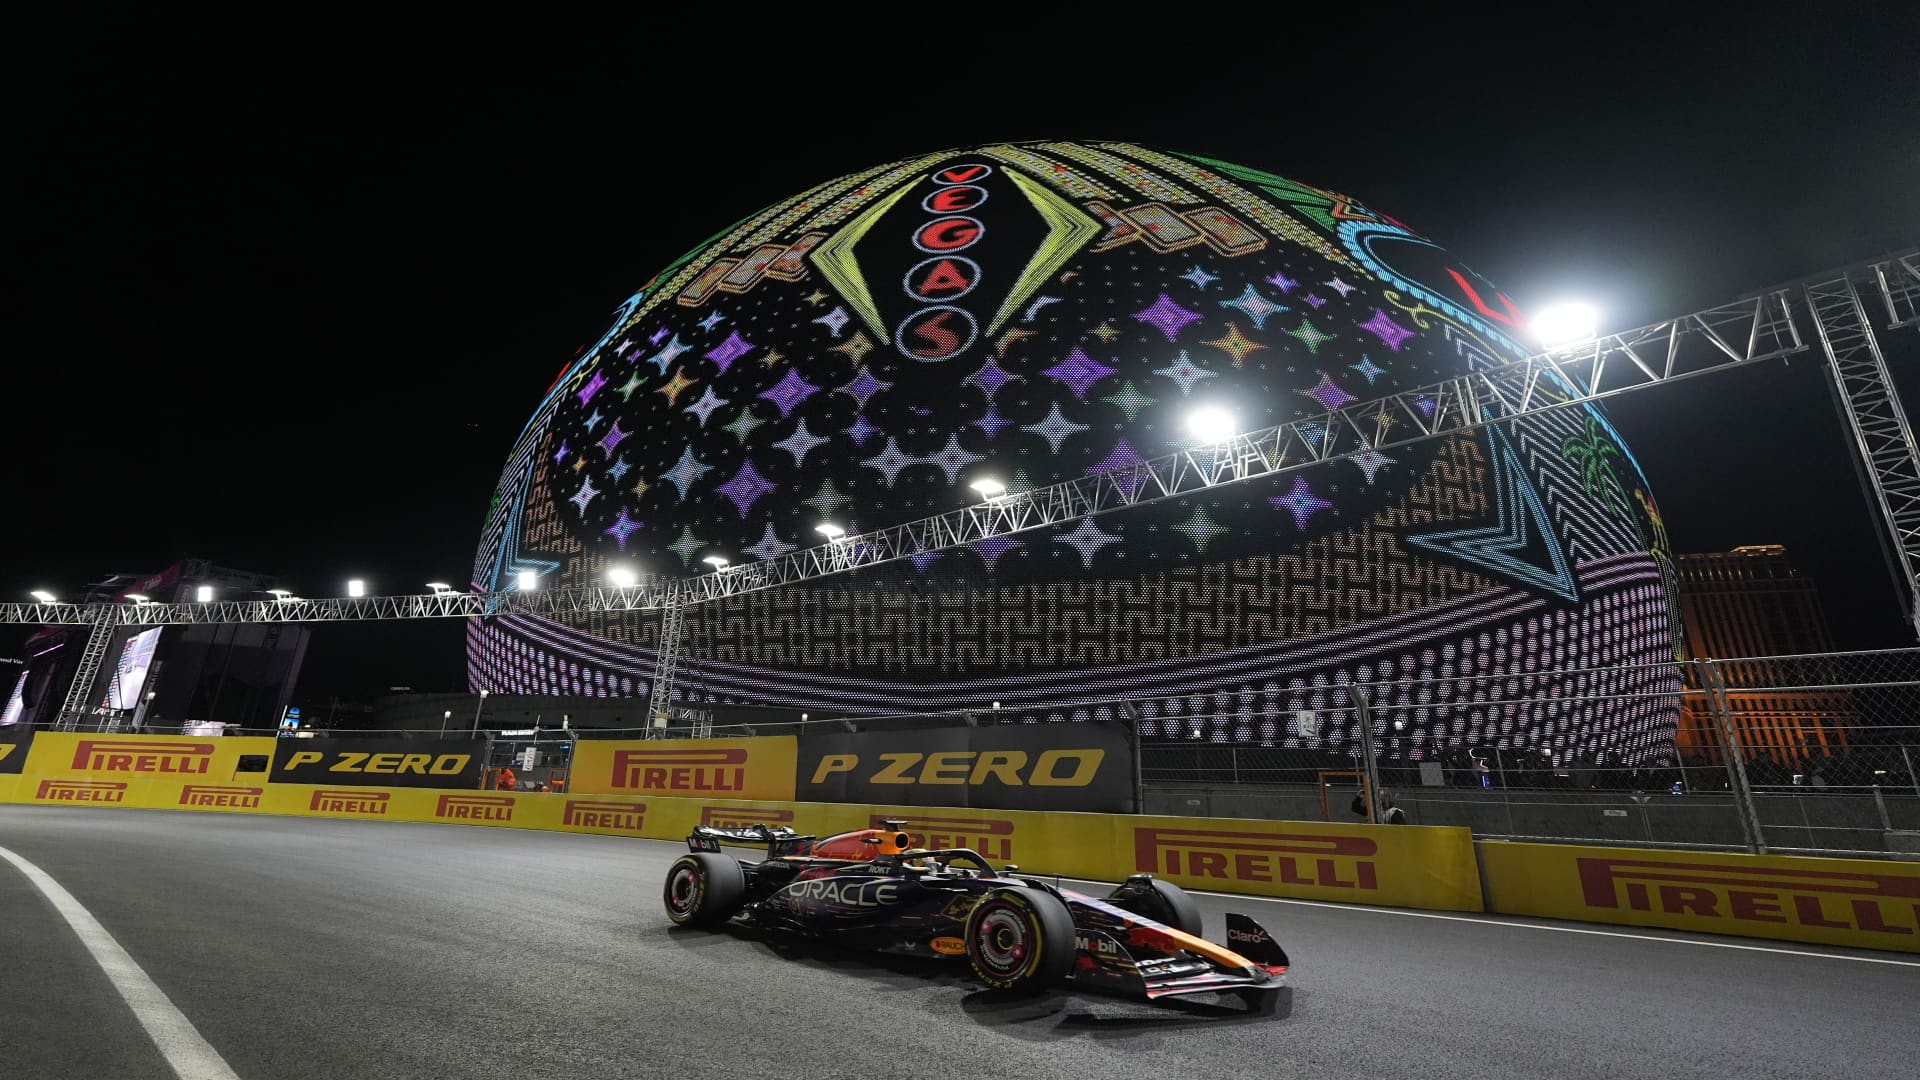 Formula One statistics for Las Vegas Grand Prix